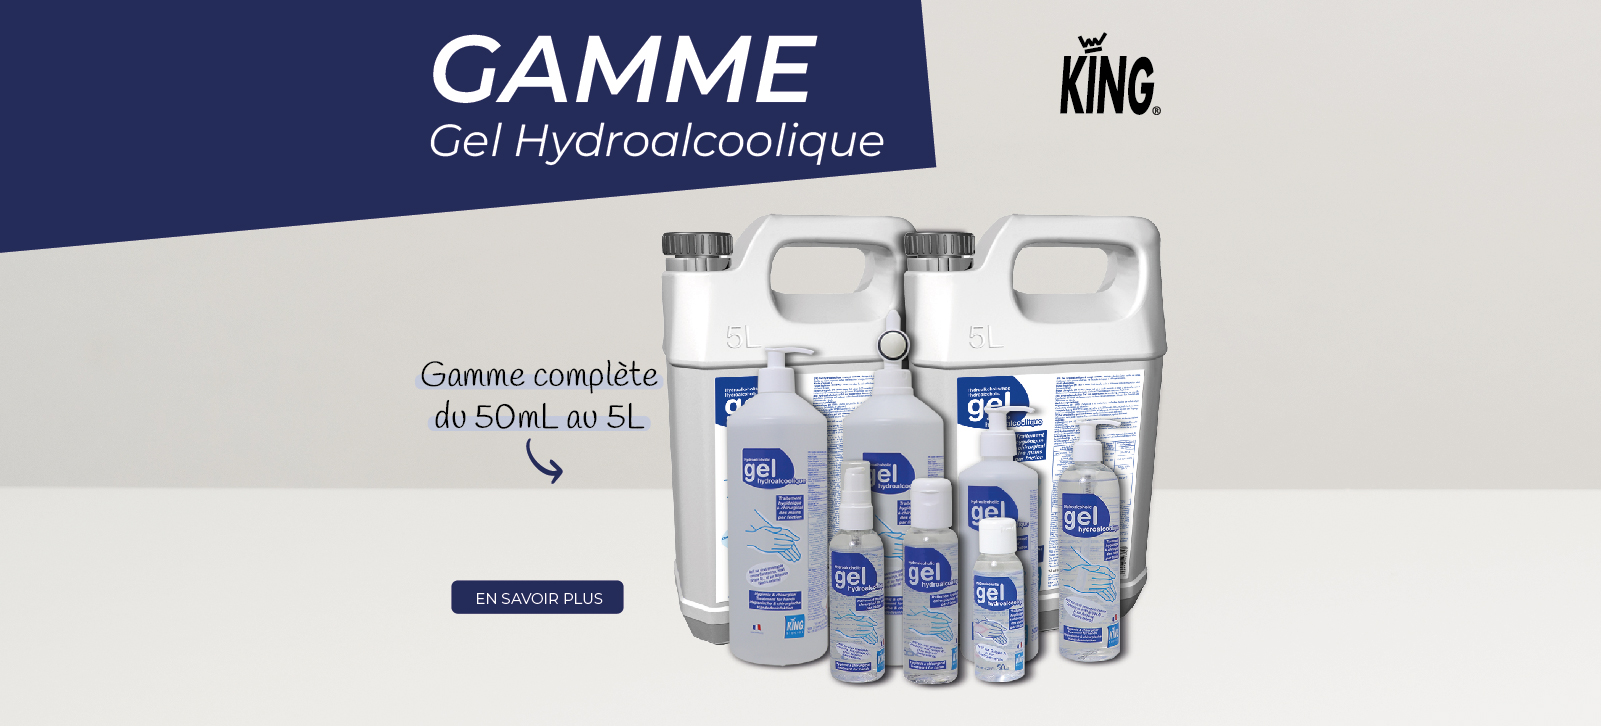 Gamme gels hydroalcooliques KING